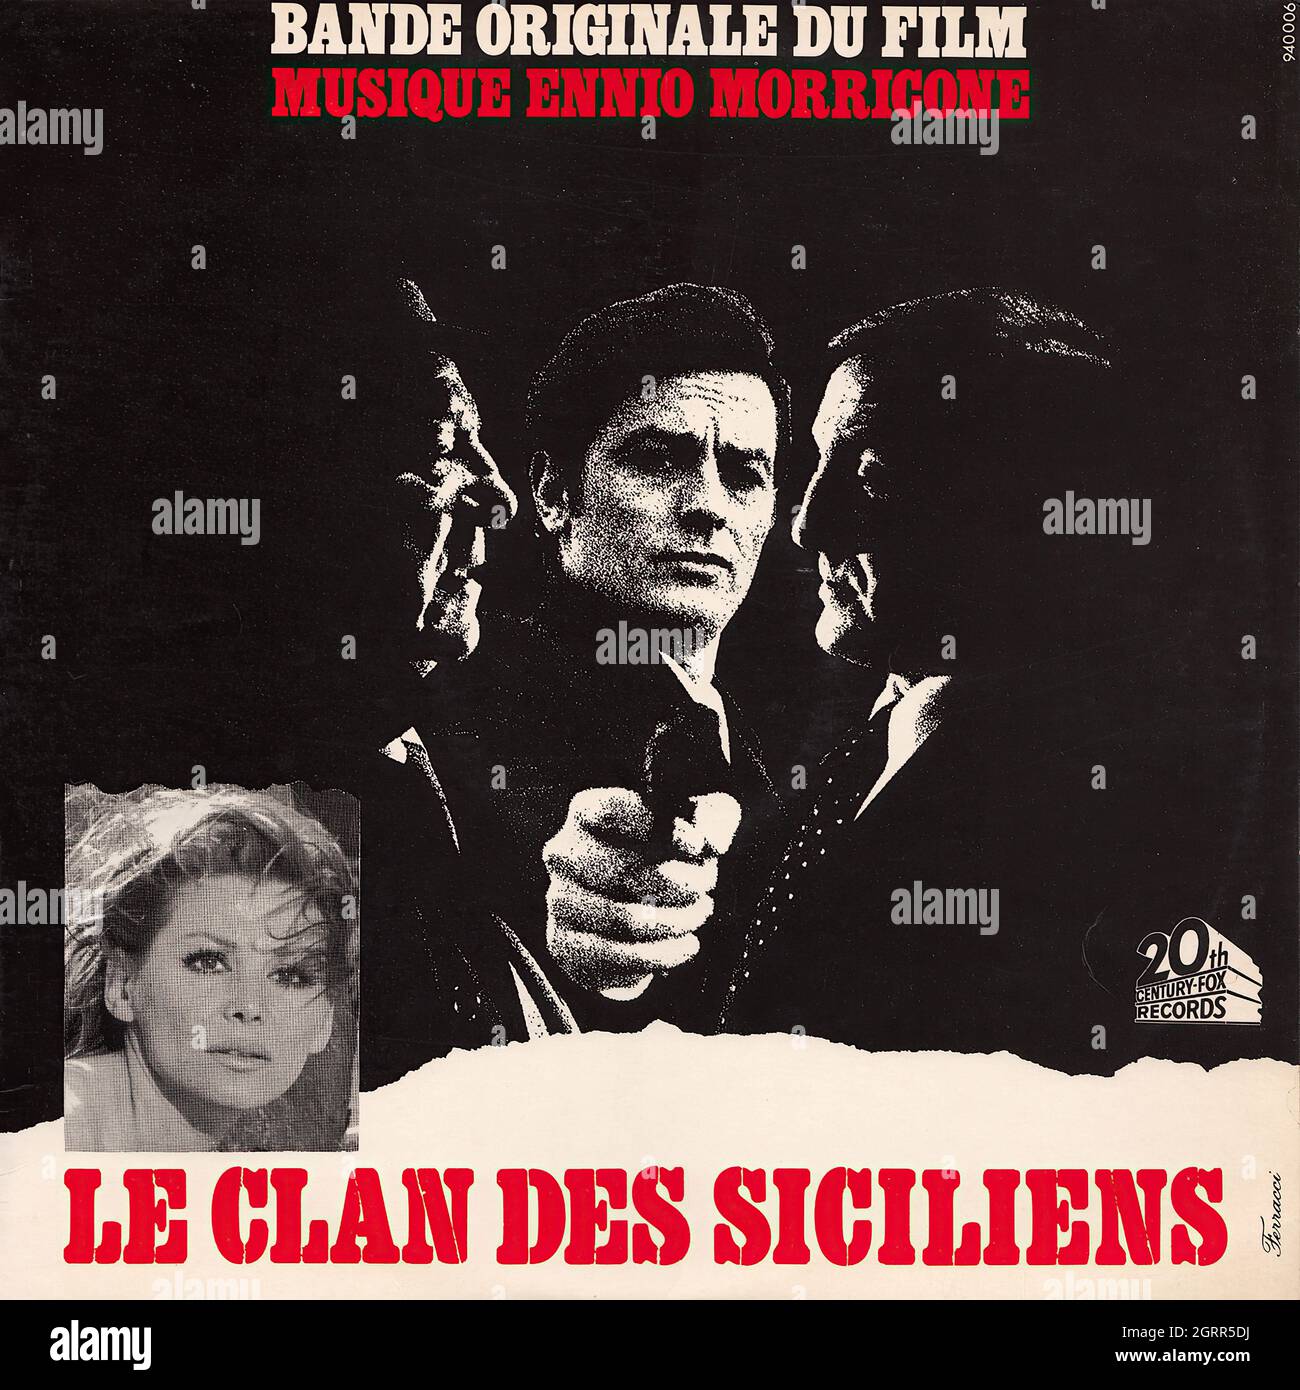 Ennio Morricone - Le clan des siciliens o.s.t01 - Vintage Vinyl Record Cover Stock Photo